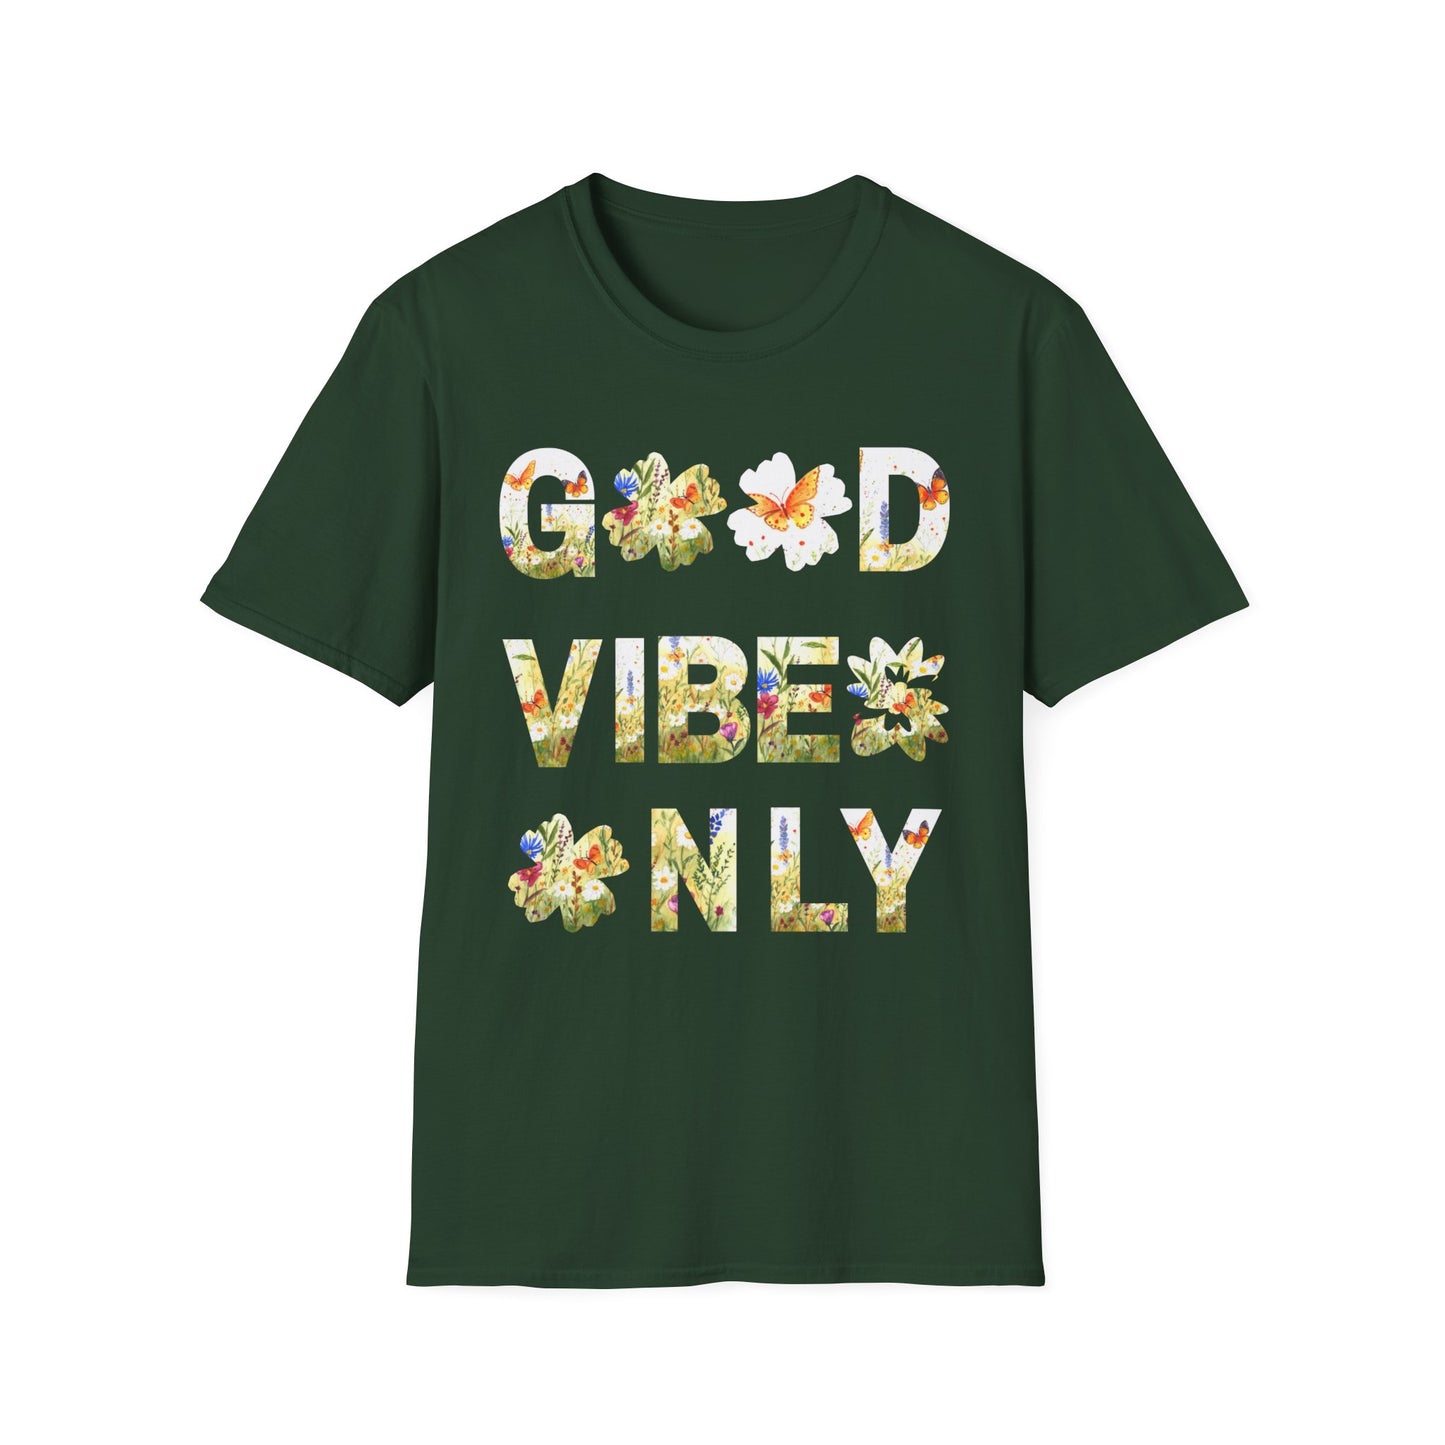 T-shirt Inspirant "Positive Vibes", 100 % Coton, Unisexe, Rayonnez avec style